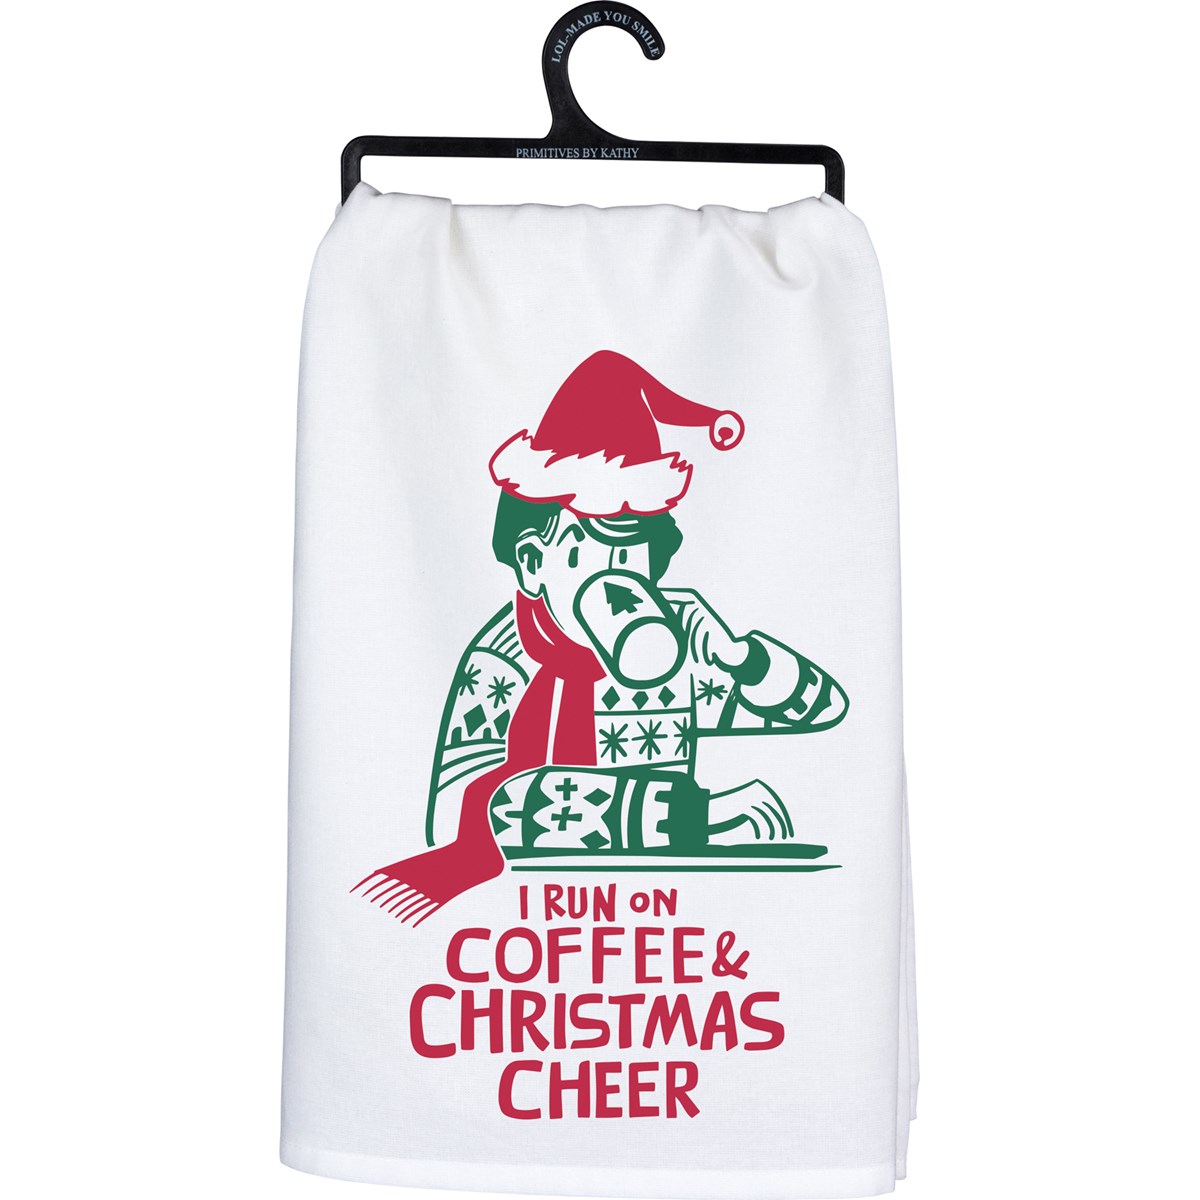 Coffee & Christmas Cheer Kitchen Towel - Cotton